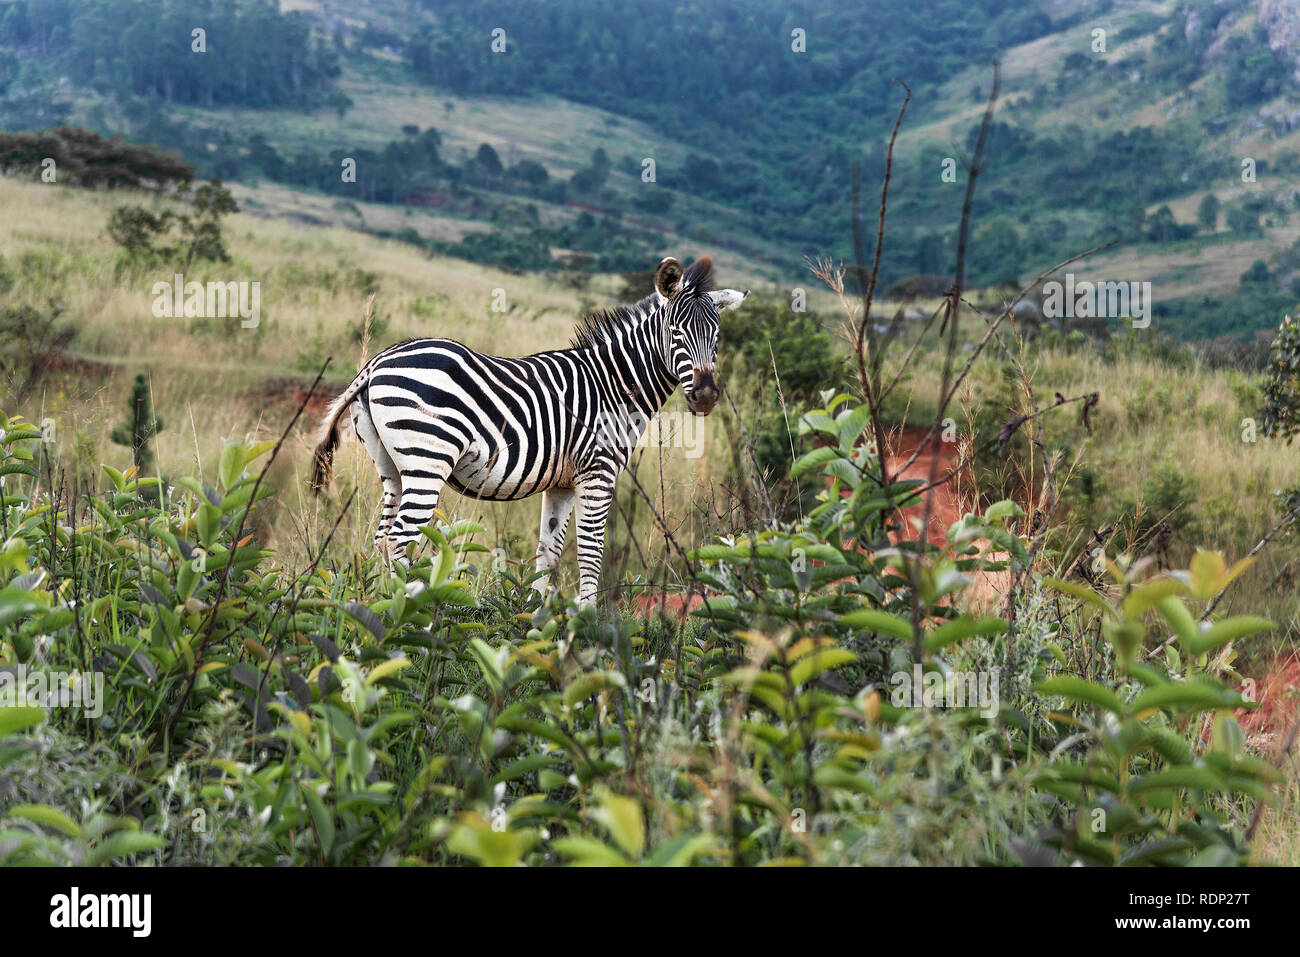 Le pianure zebra (Equus quagga) o la Burchell Zebra in piedi nel paesaggio collinare di Hluhluwe Imfolozi Park,una riserva di caccia,KwaZulu-Natal,Sud Africa Foto Stock